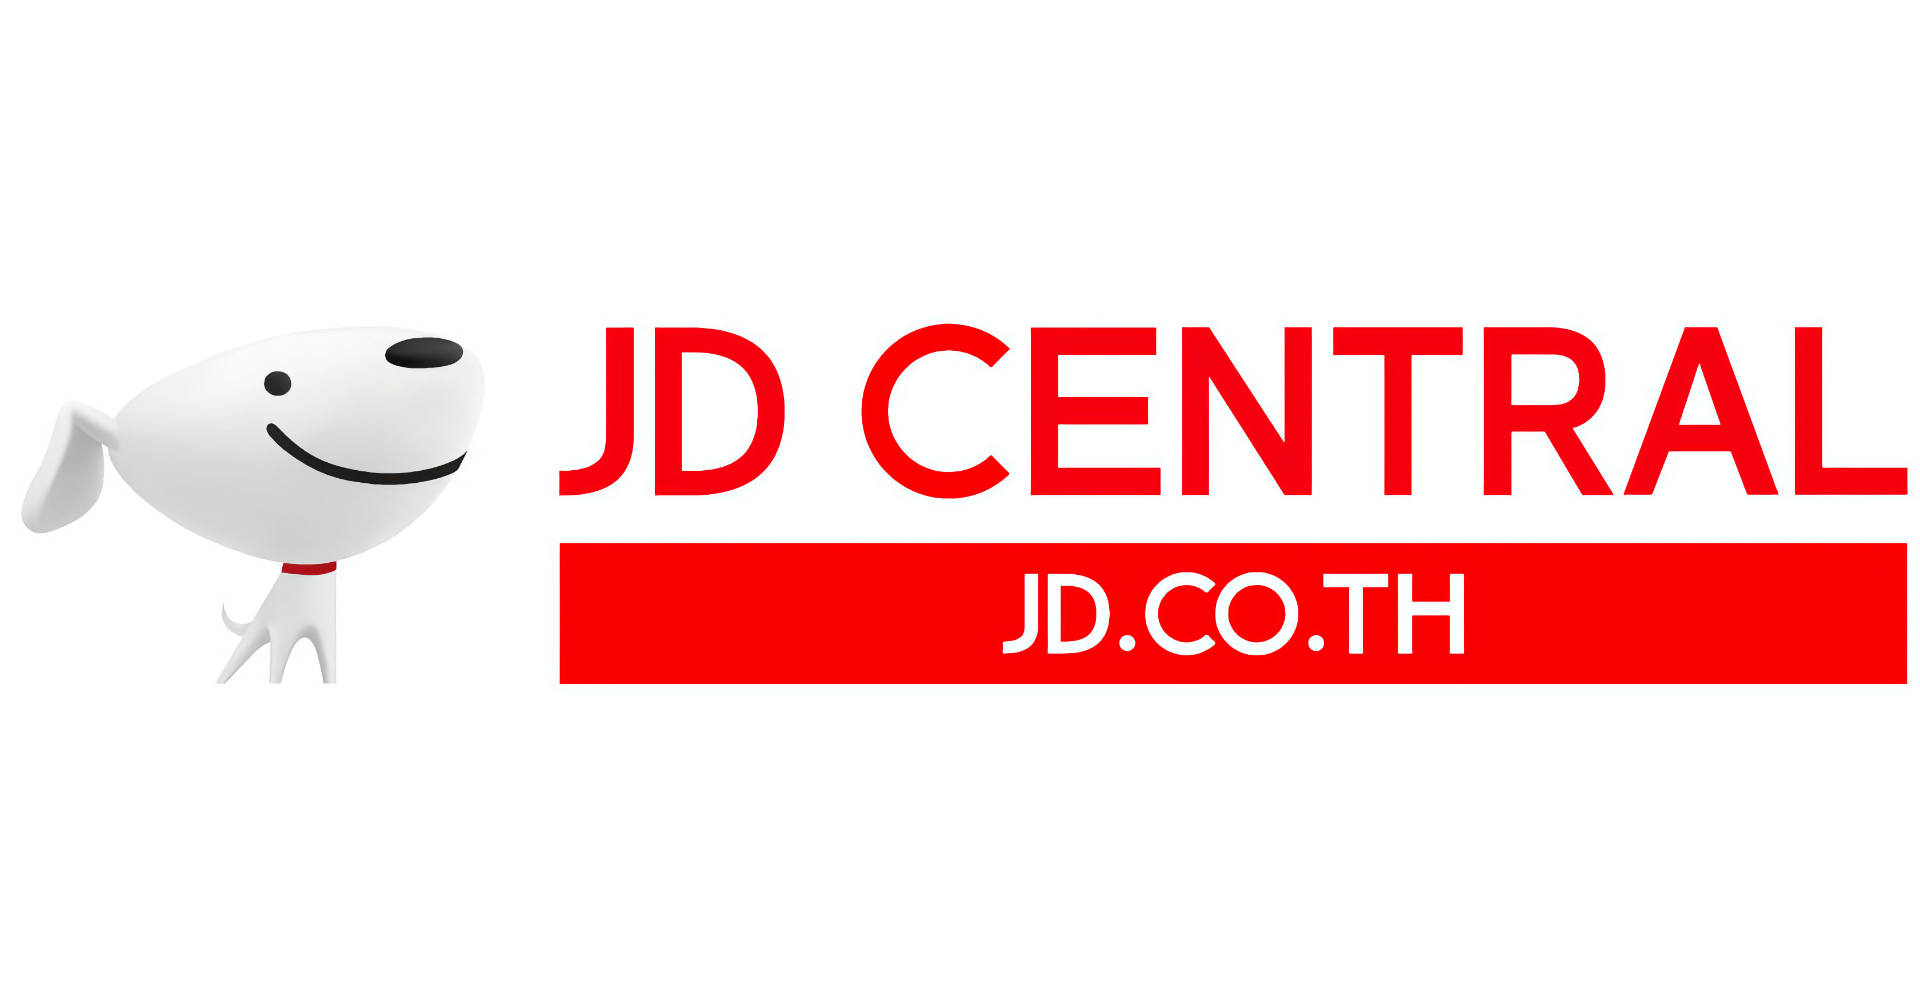 JD CENTRAL สู้ไม่ไหว! ประกาศยุติให้บริการในไทย มีผลตั้งแต่ 3 มีนาคม 2566